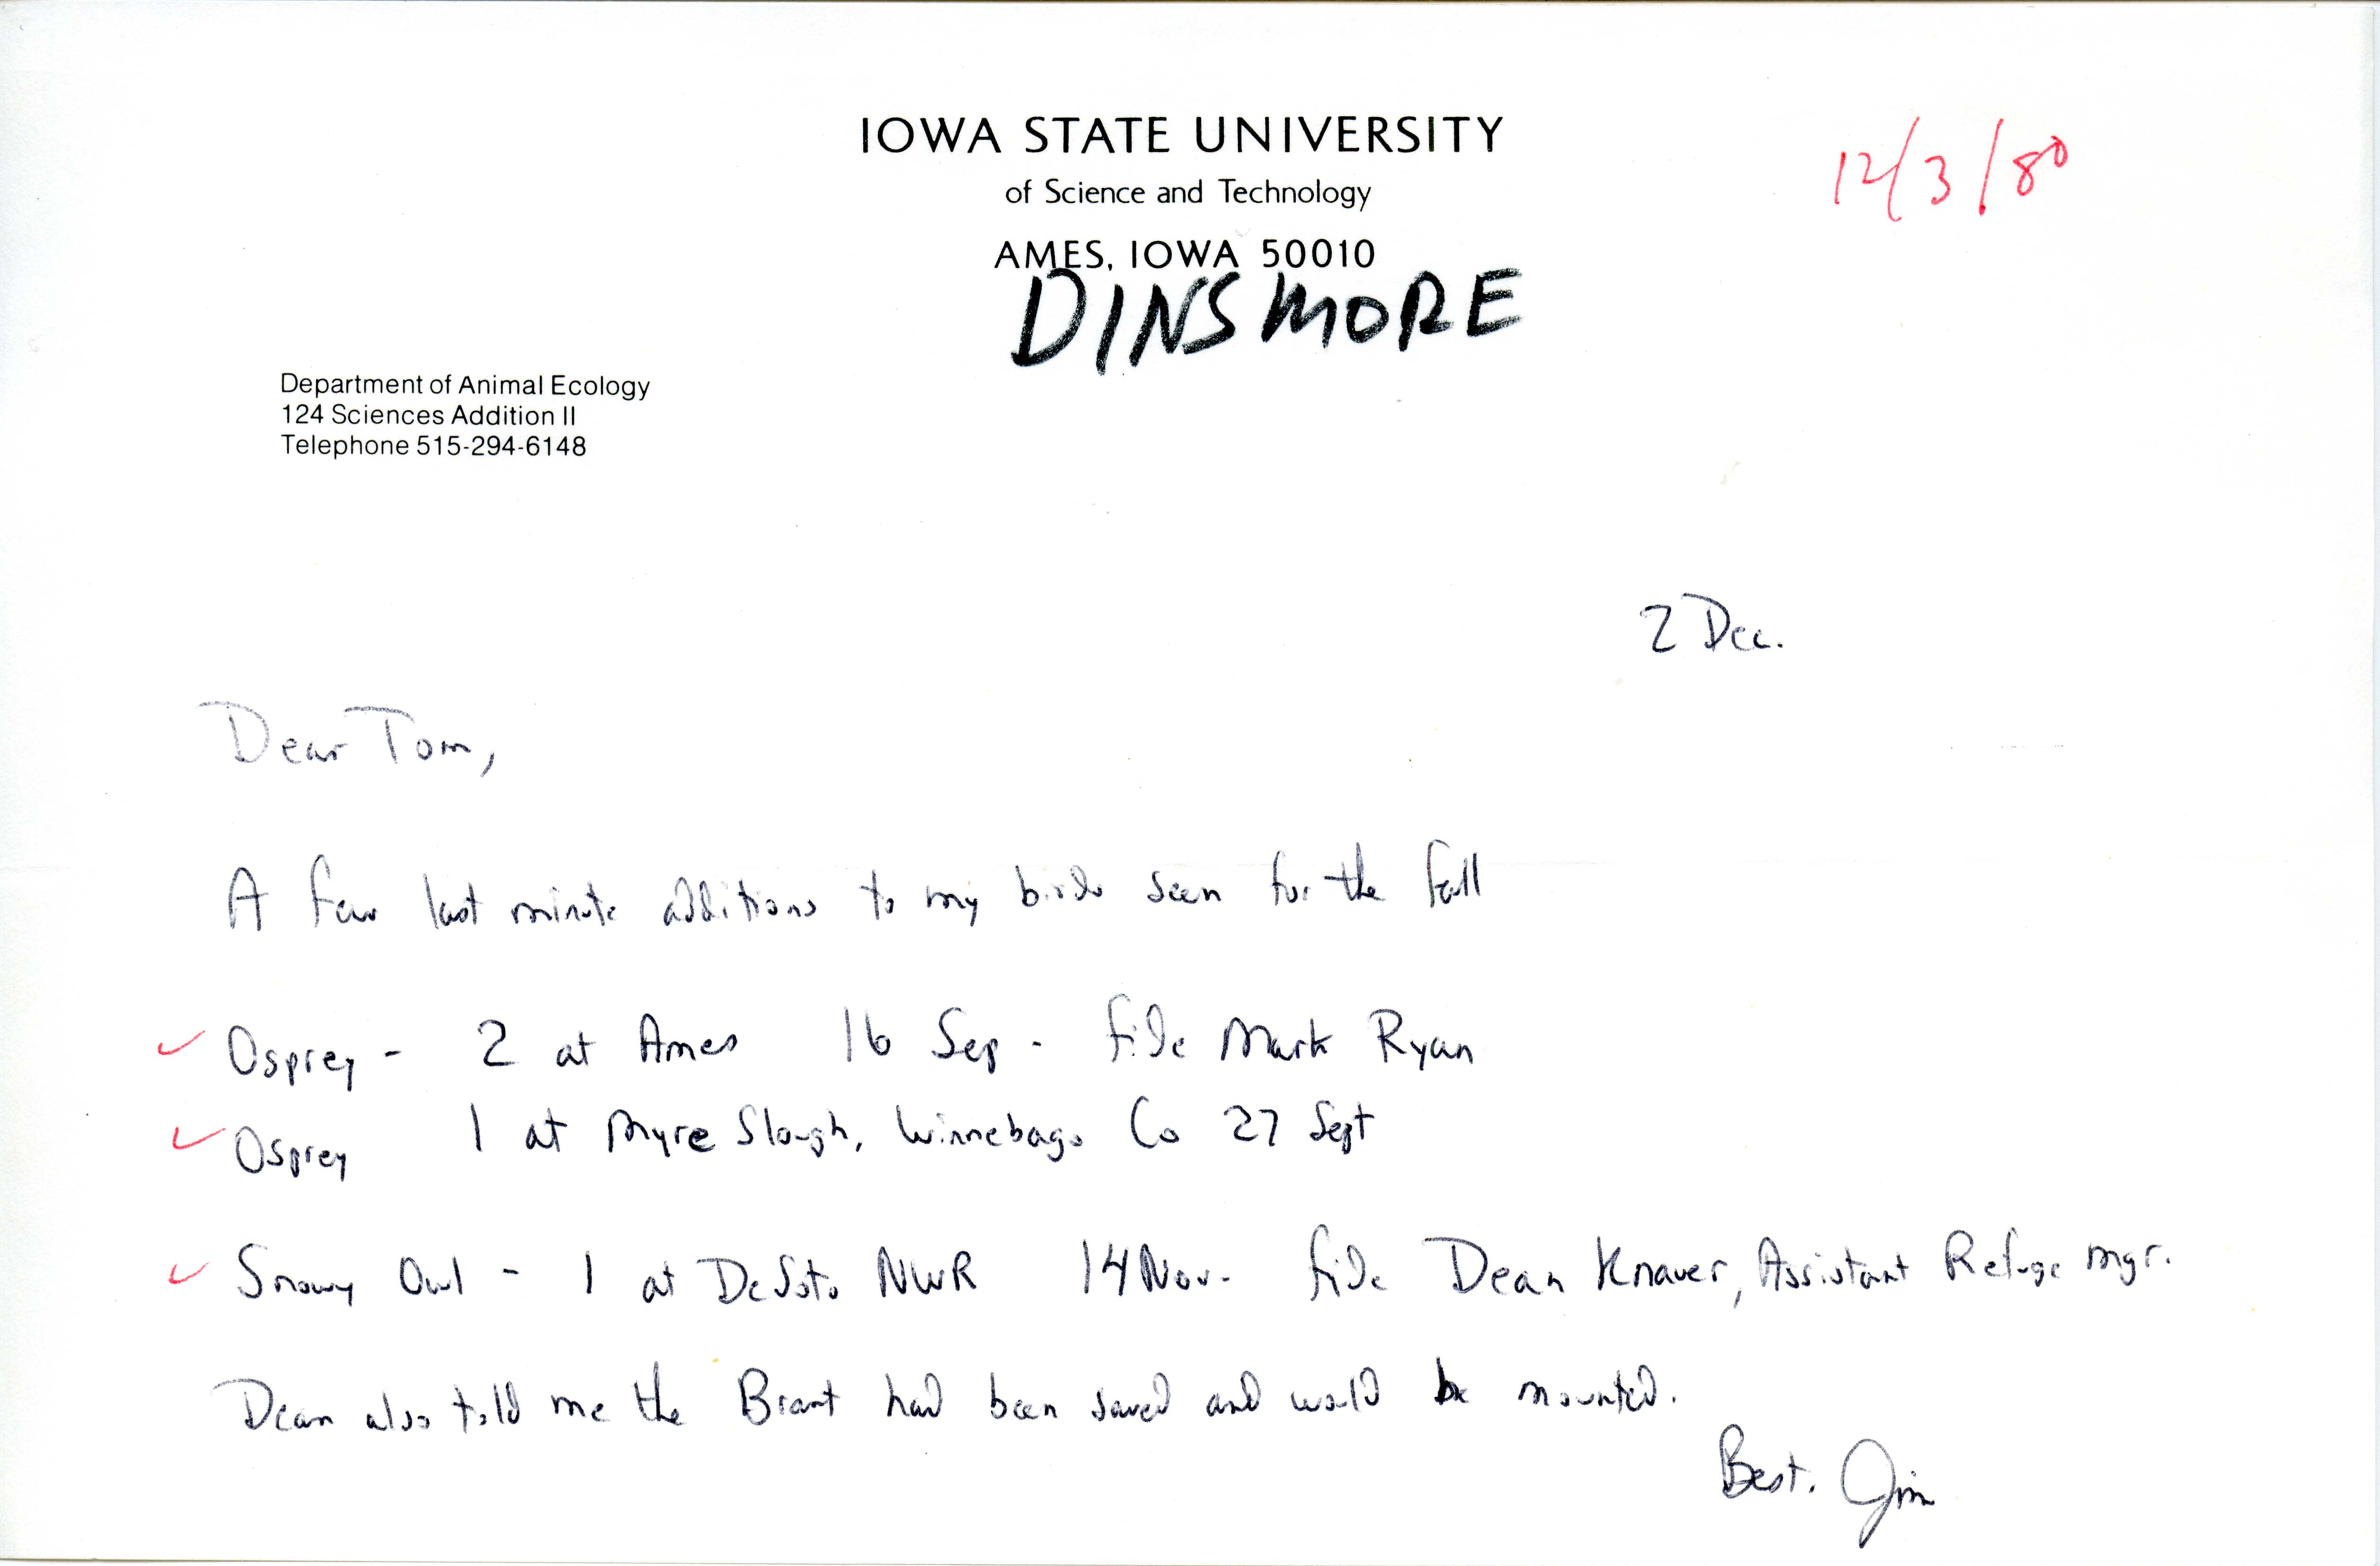 Jim Dinsmore letter to Thomas Kent regarding Osprey and Snowy Owl sightings, December 2, 1980